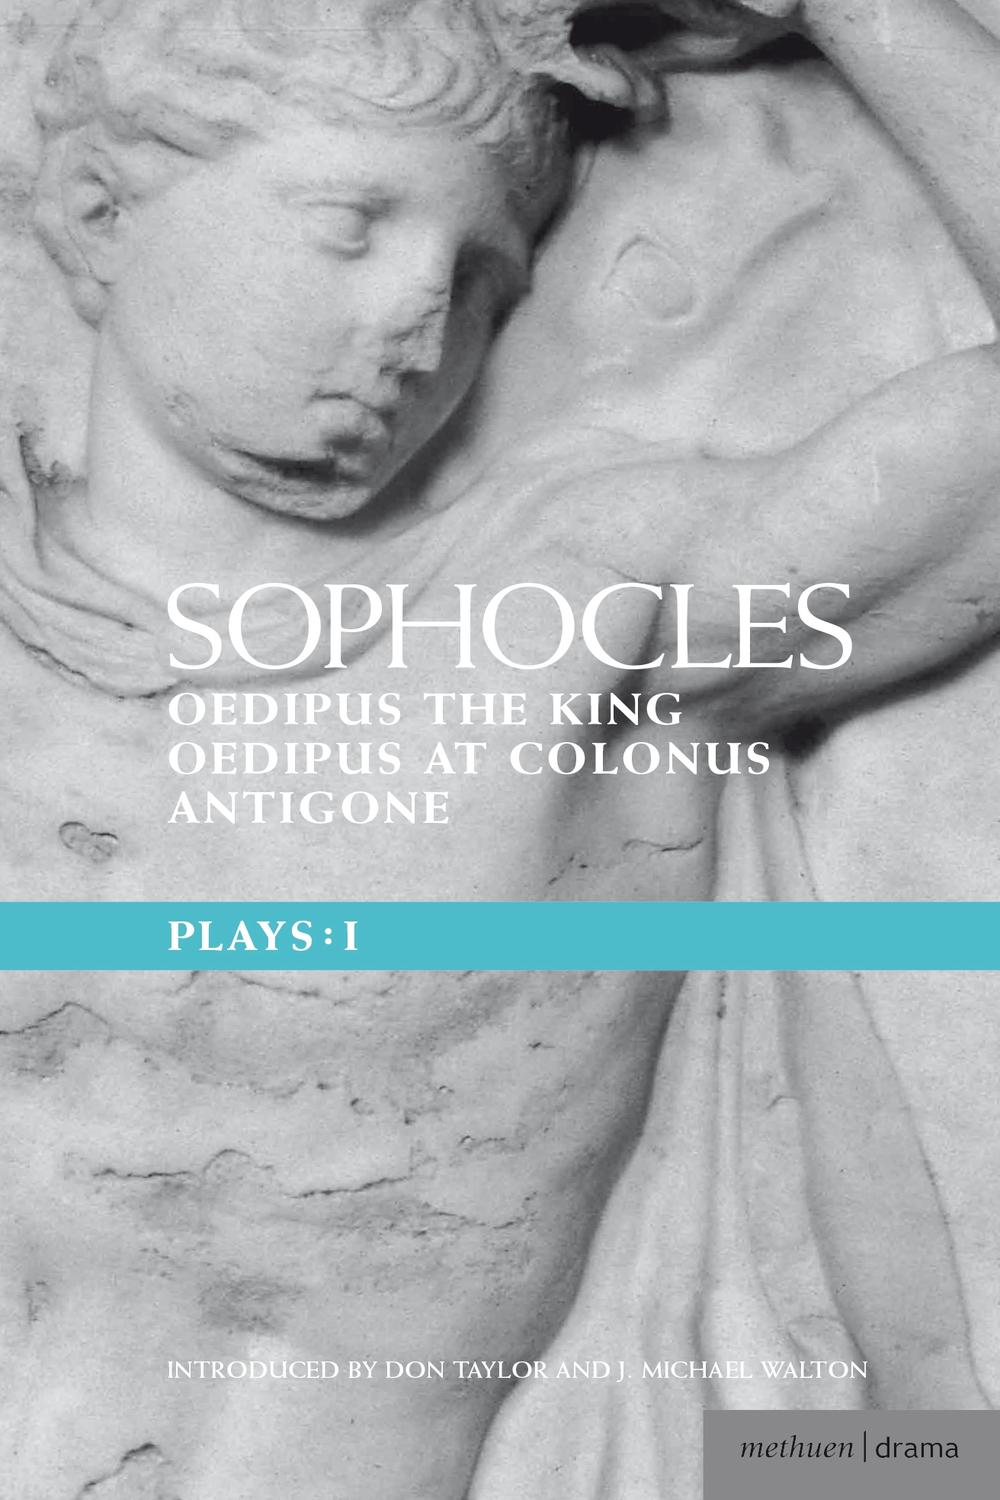 Реферат: Oedipus Essay Research Paper Oedipus and Antigone